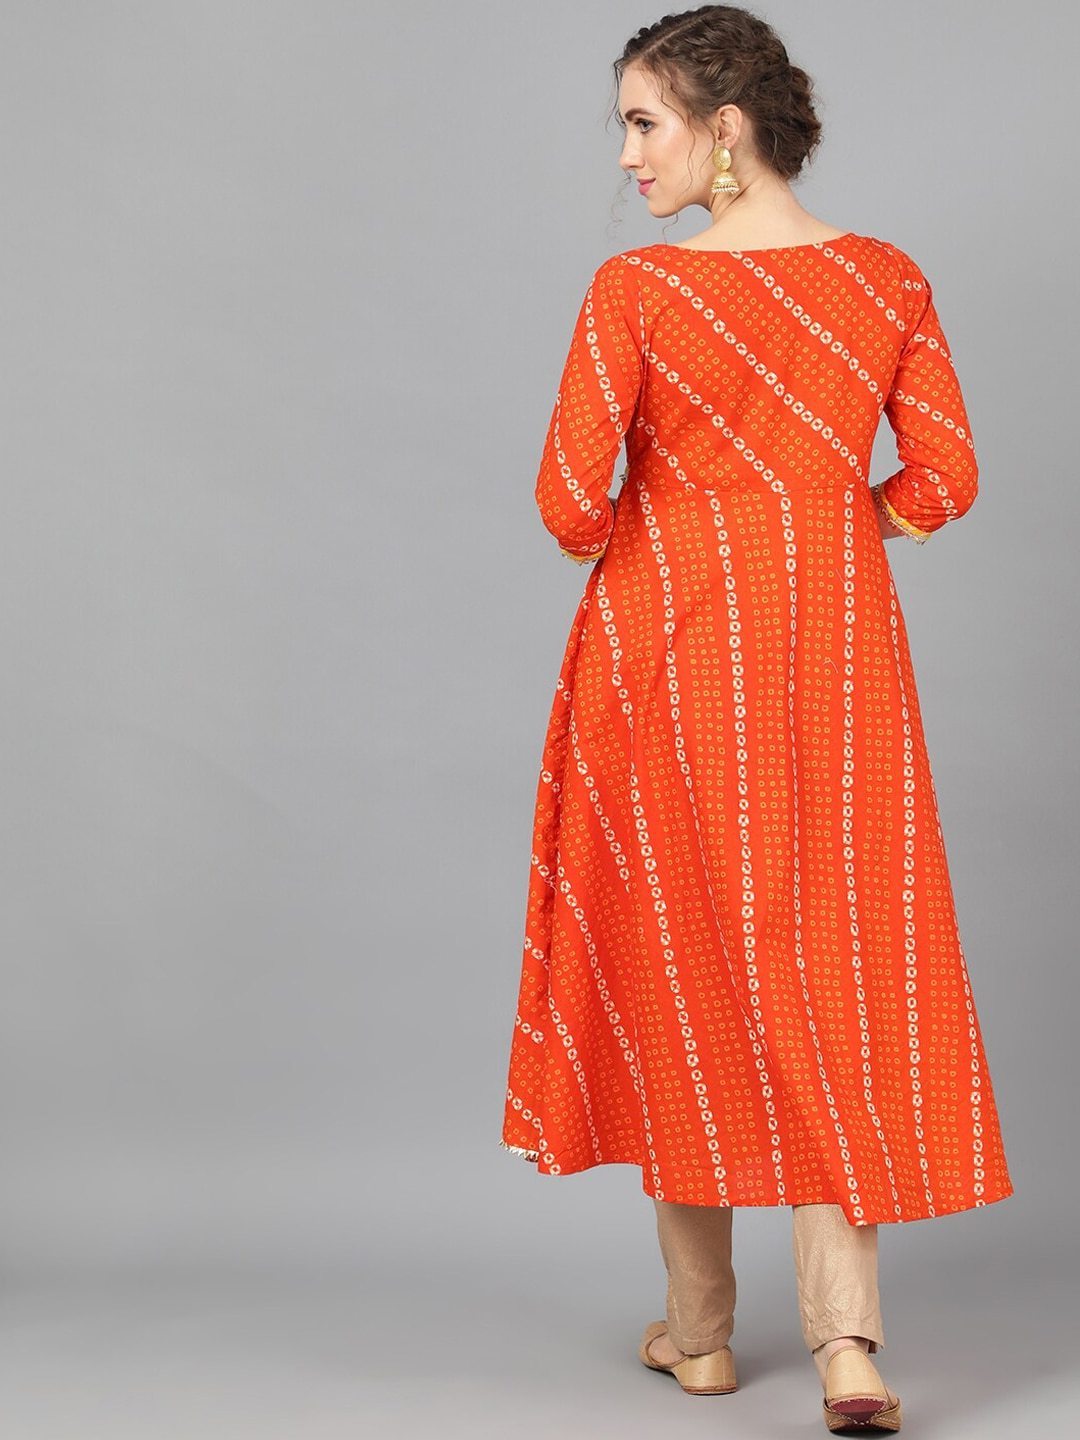 Women's  Orange & White Bandhani Printed A-Line Kurta - AKS